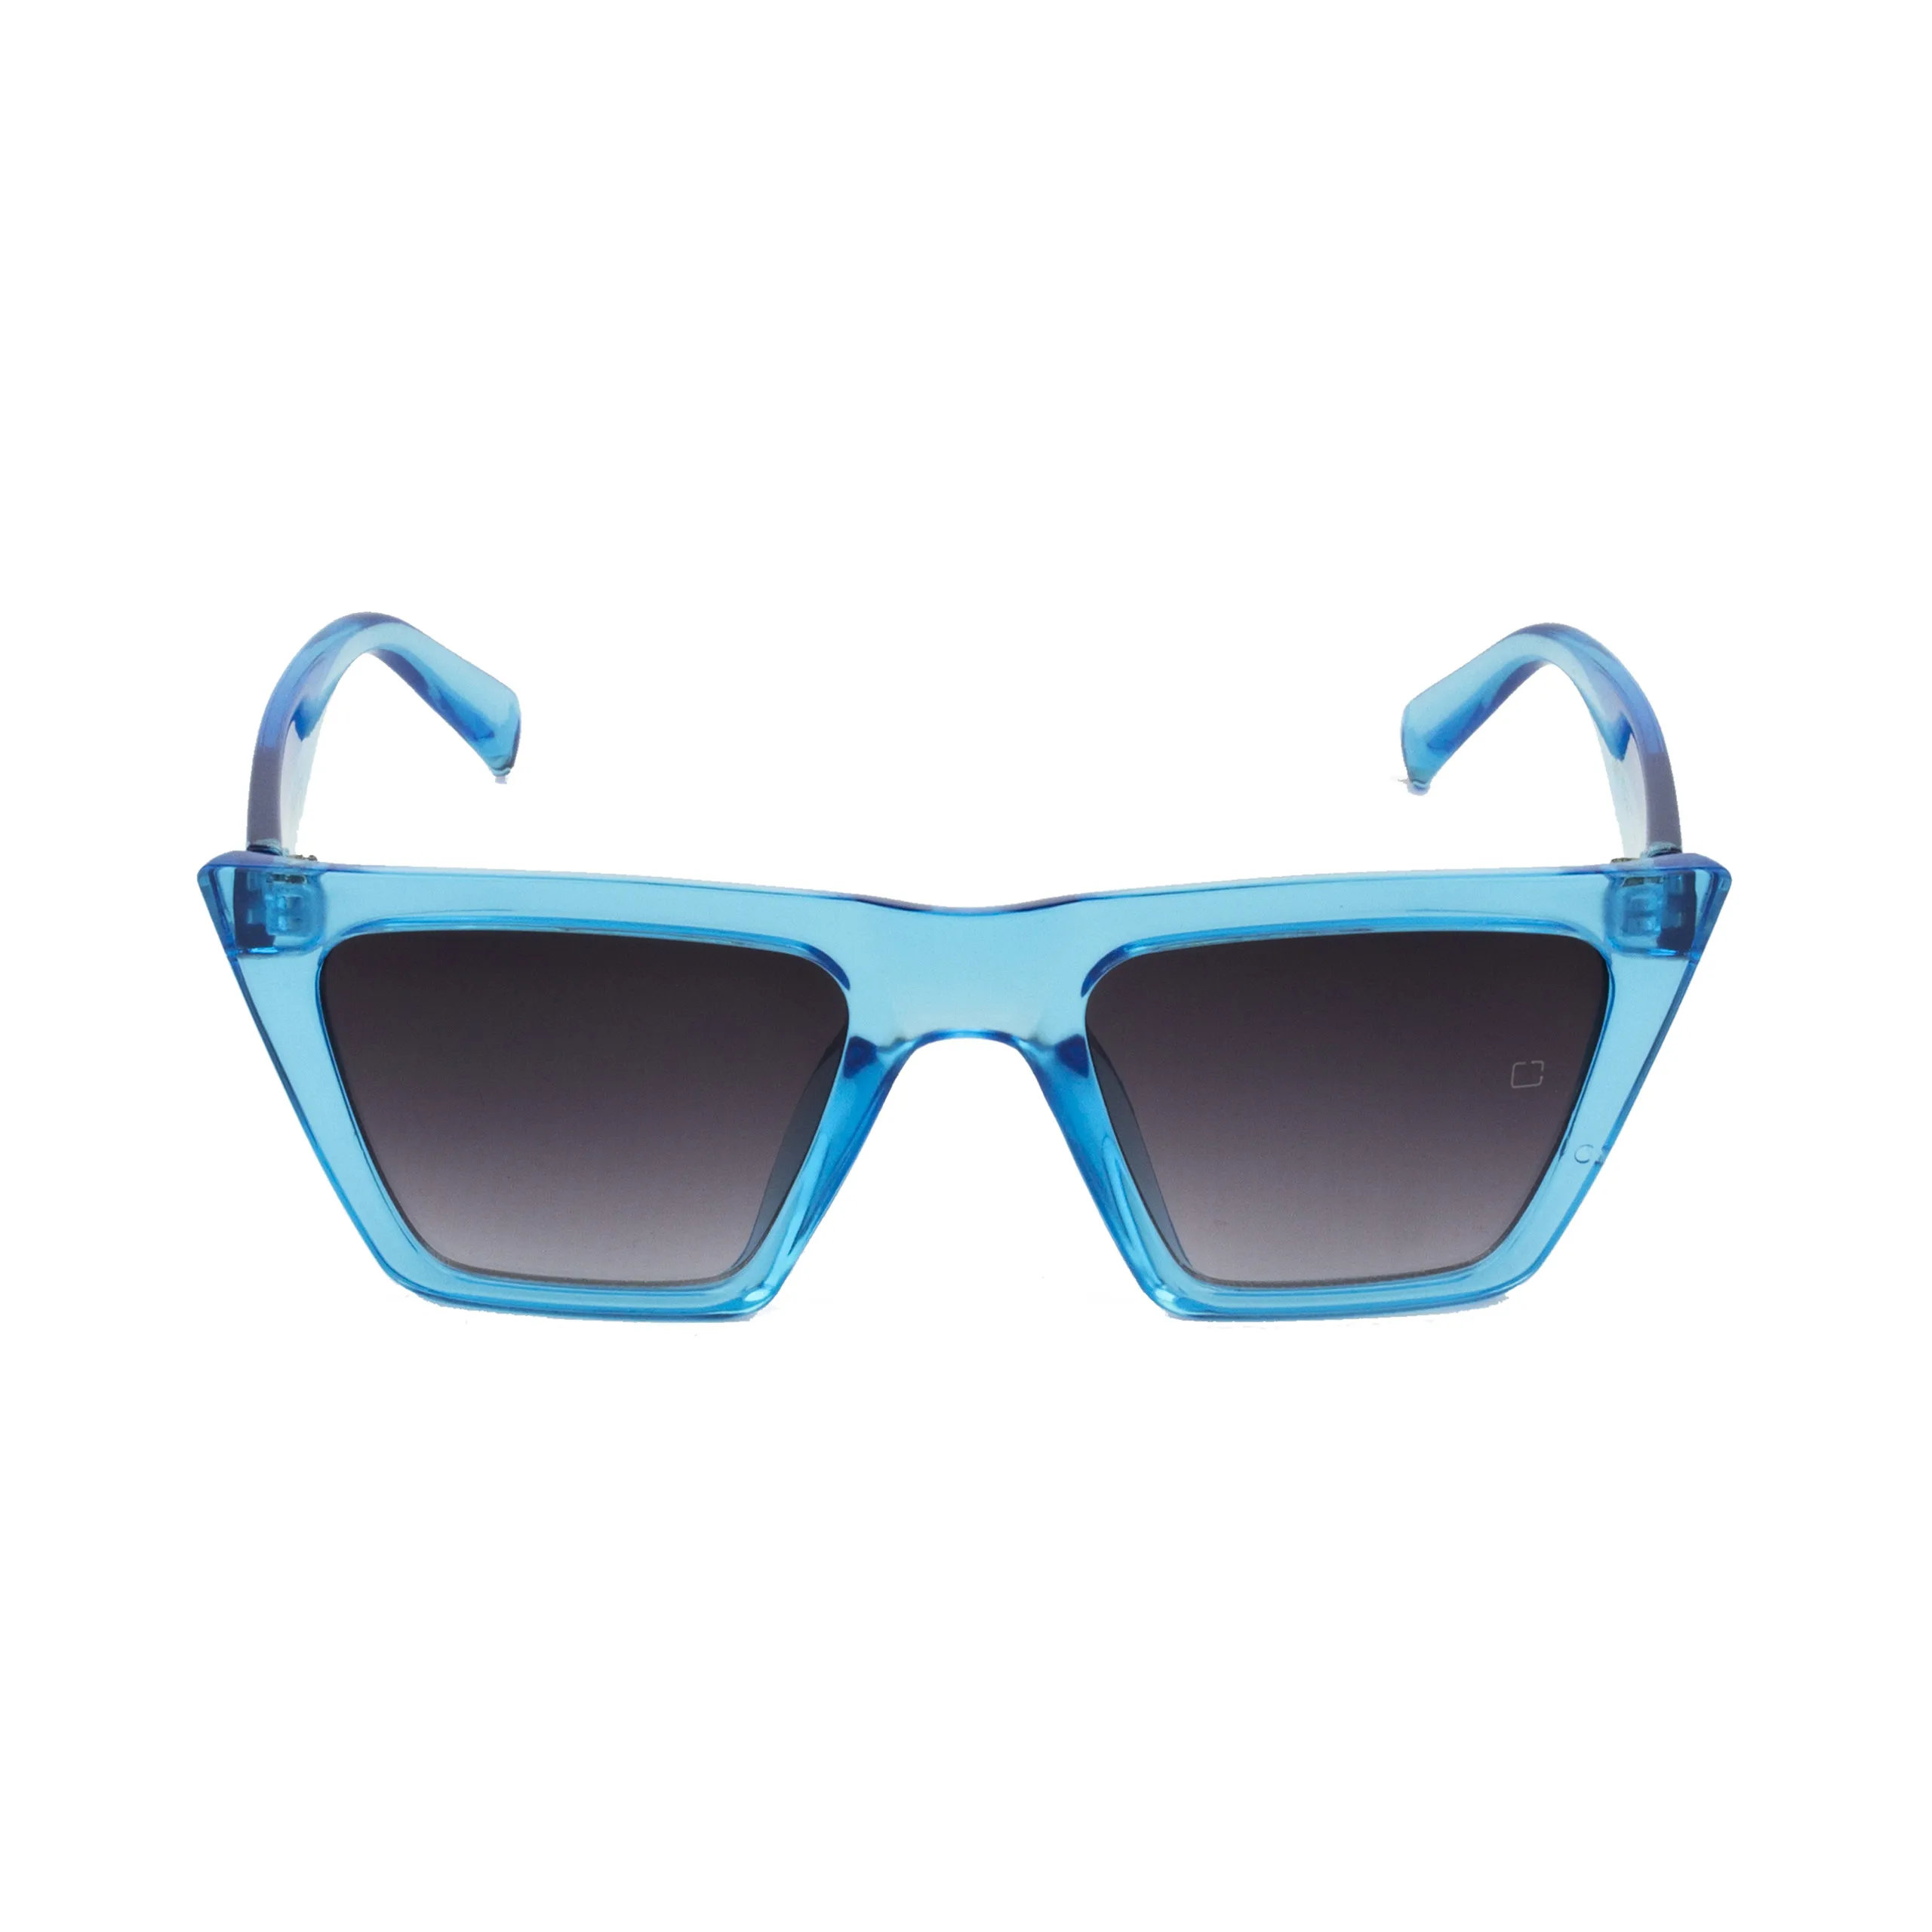 Zolo eyewear 6881 синие солнцезащитные очки